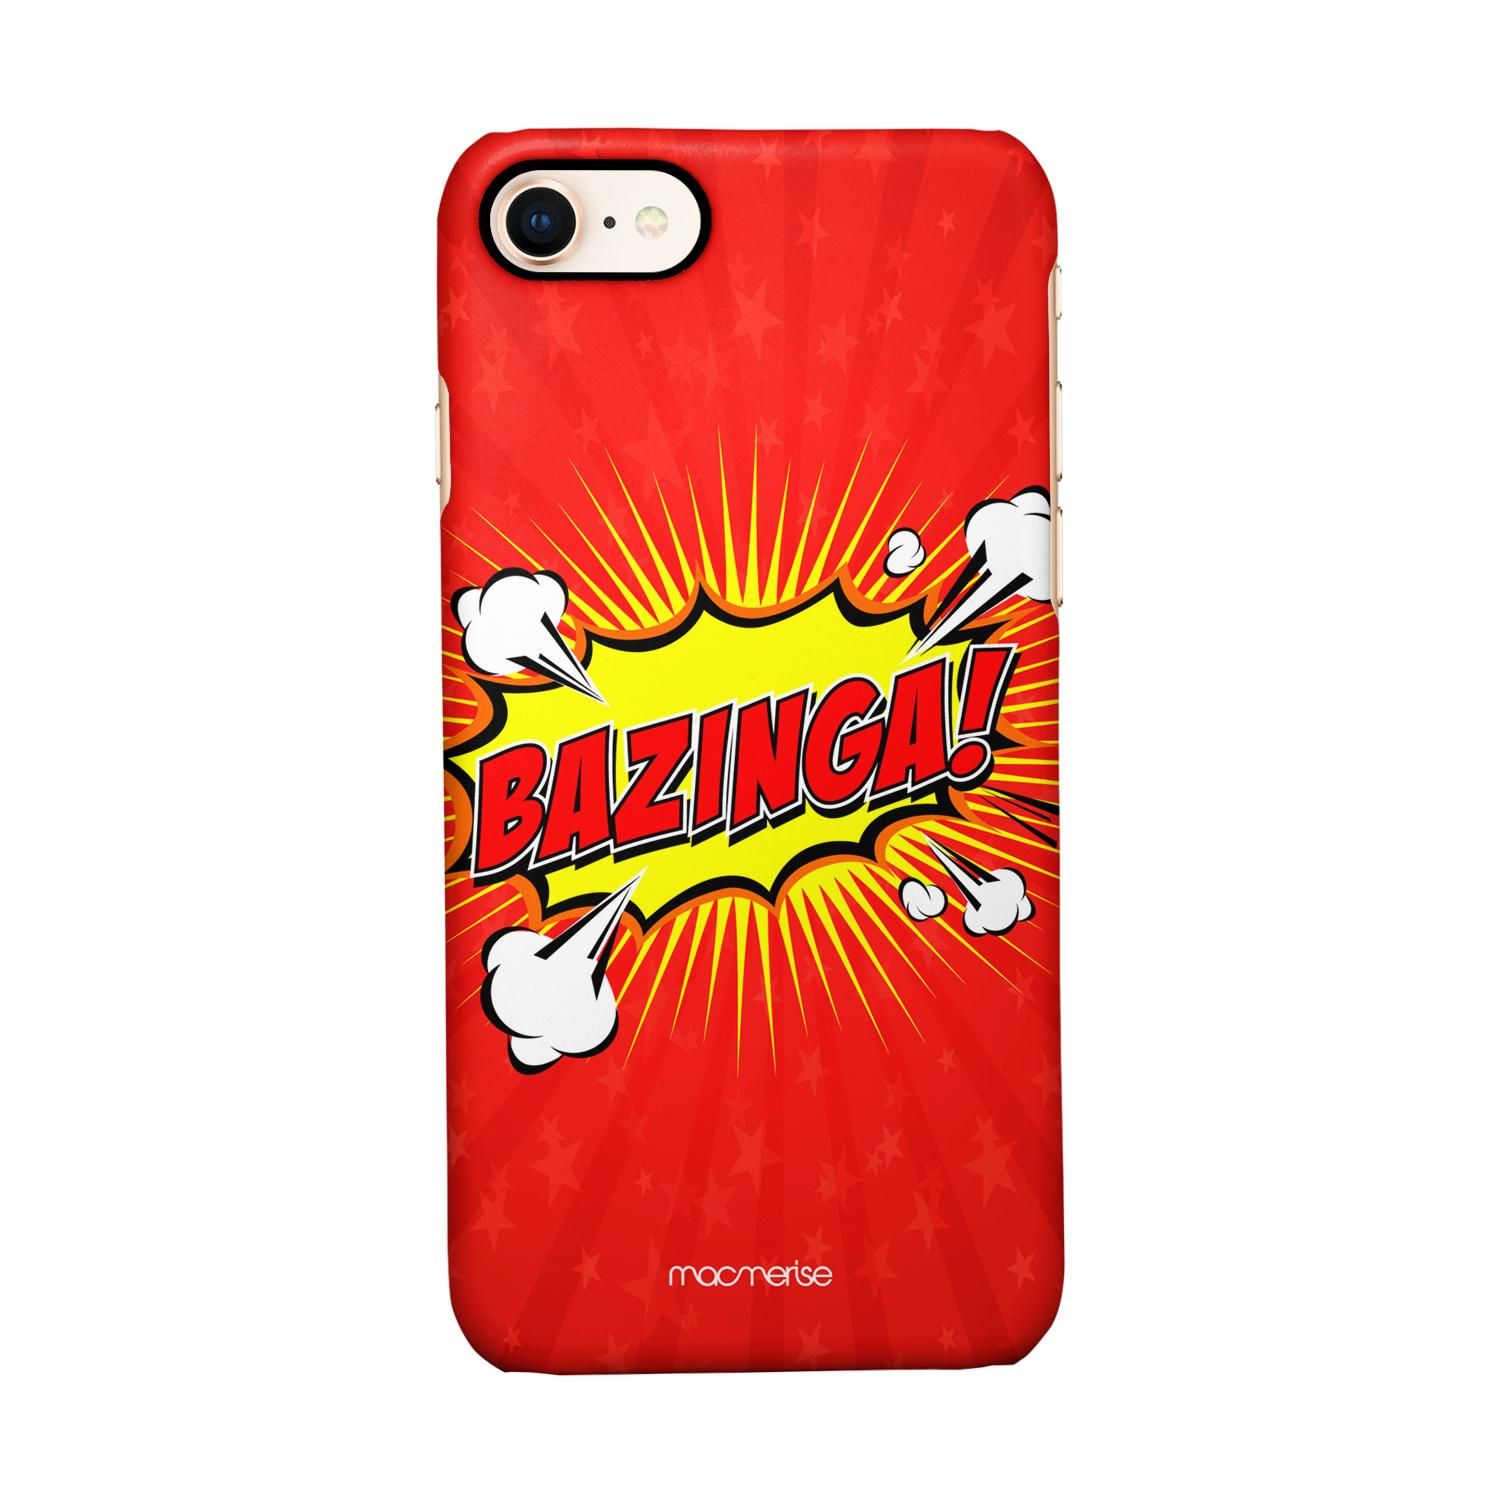 Buy Bazinga - Sleek Phone Case for iPhone 7 Online